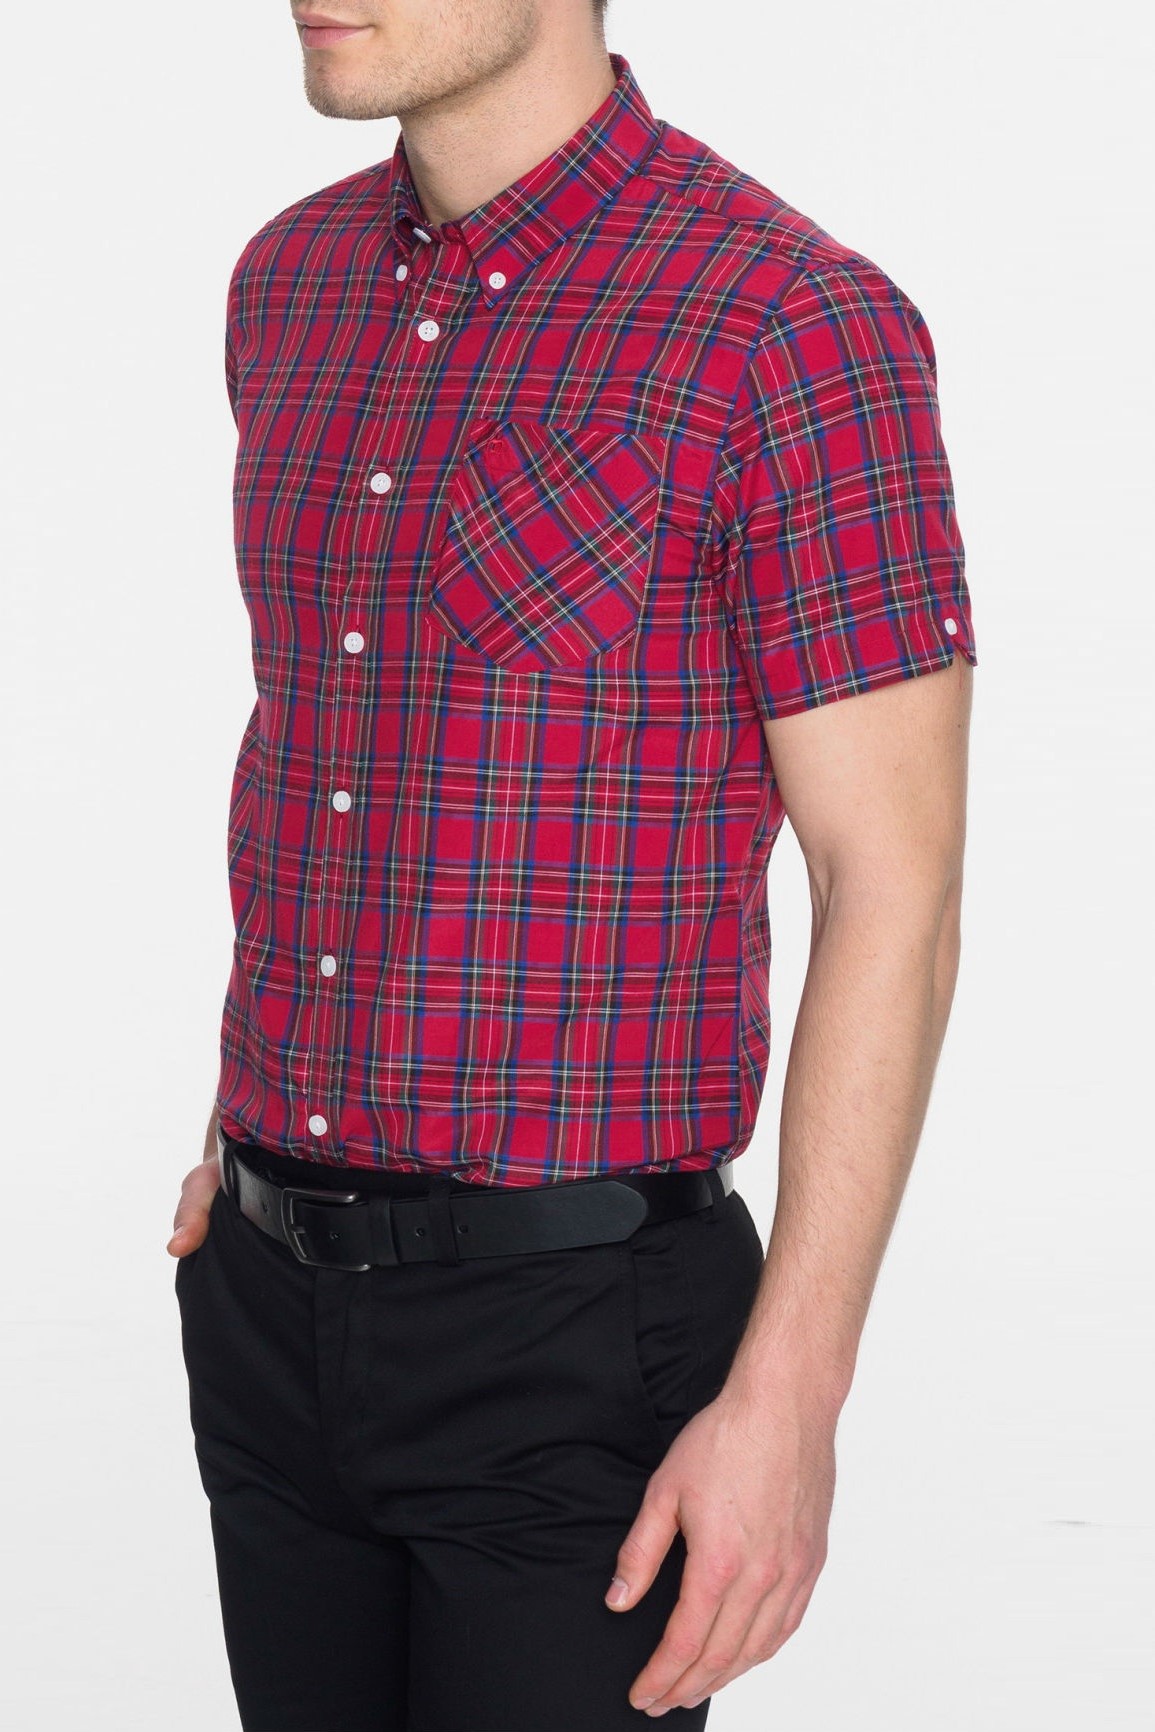 Рубашка в клетку шотландку Merc Mack, stewart red (красная), с коротким рукавом